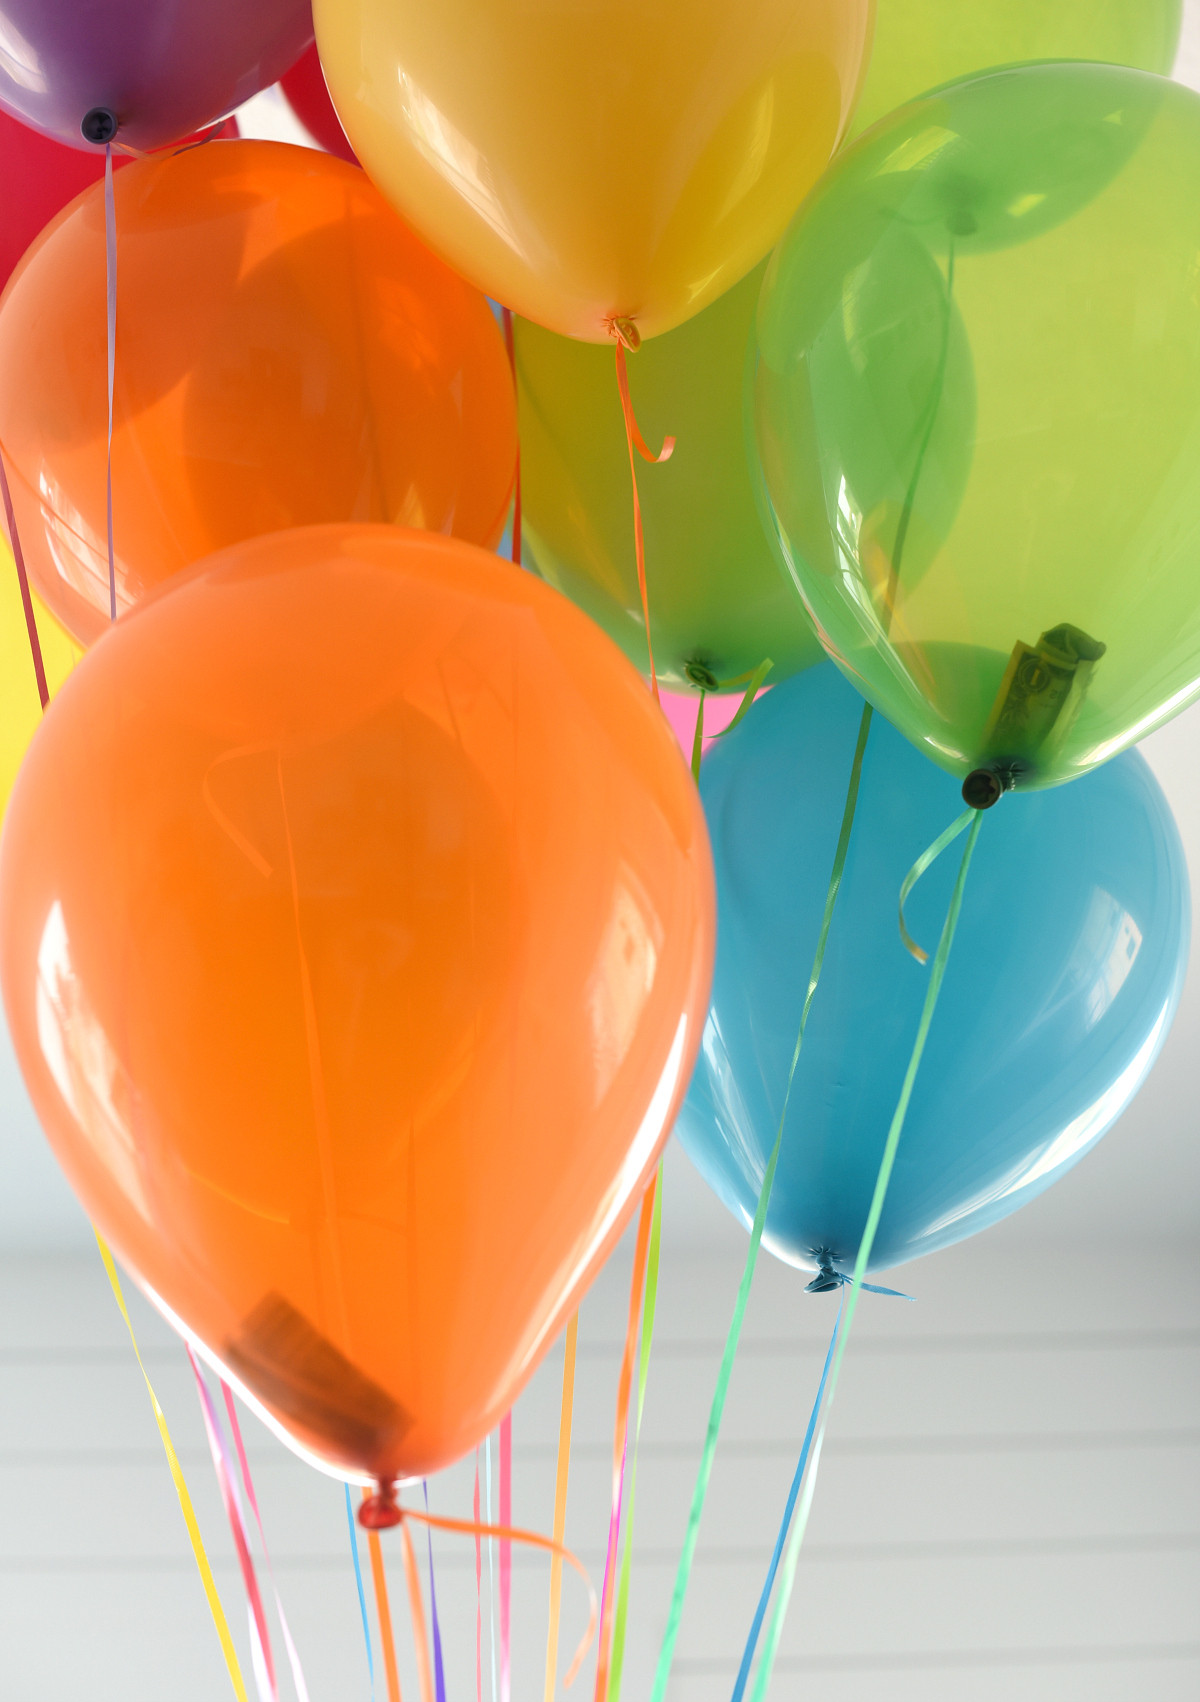 Money Gift Ideas For Birthdays
 Money Gift Ideas Birthday Balloons – Fun Squared